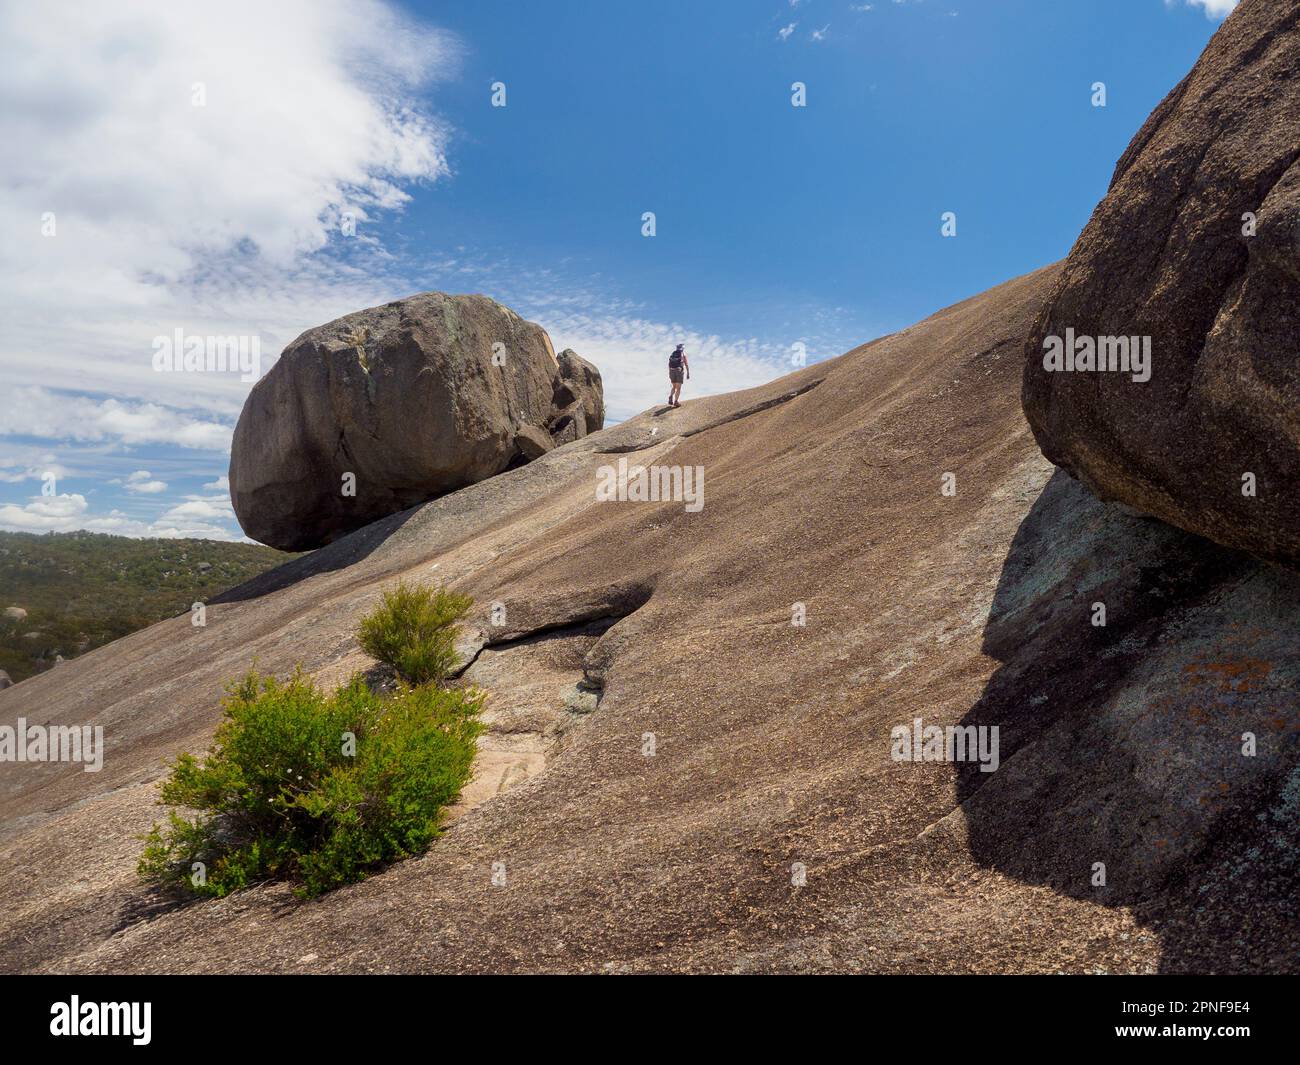 Australia, Queensland, Girraween National Park, Woman hiking on rock formation Stock Photo